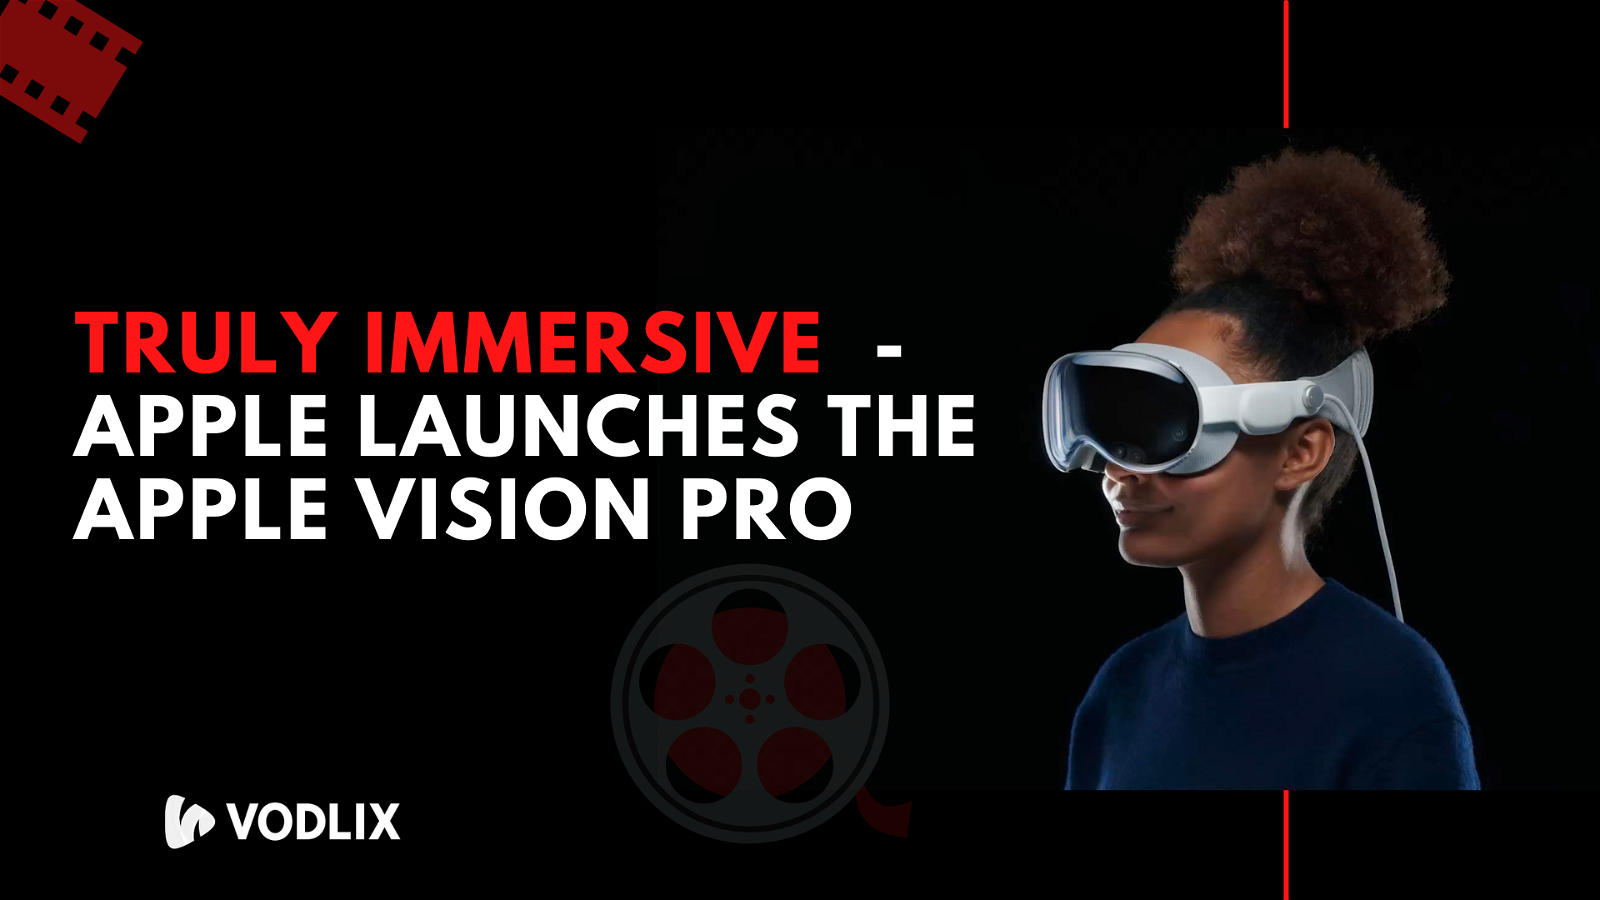 Vodlix VR (Virtual Reality) Apps